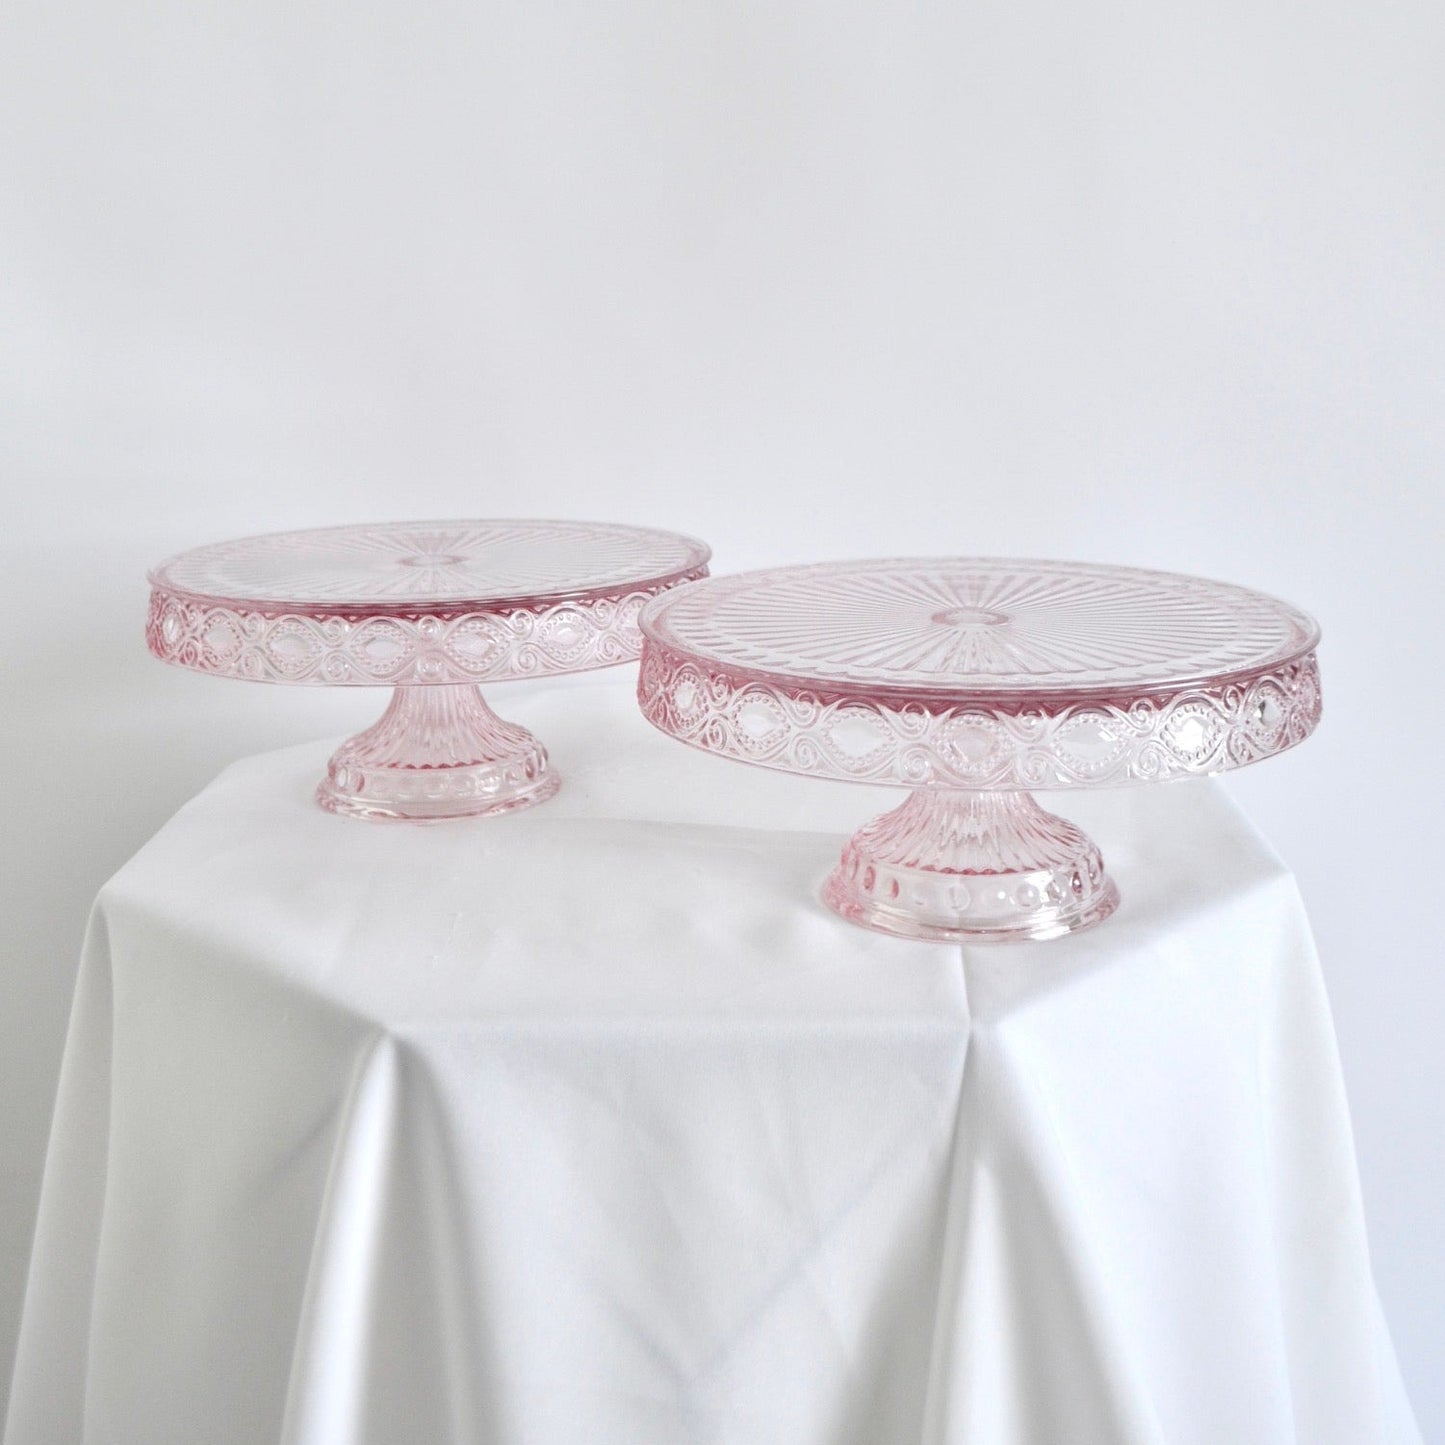 Pink glass cake stand